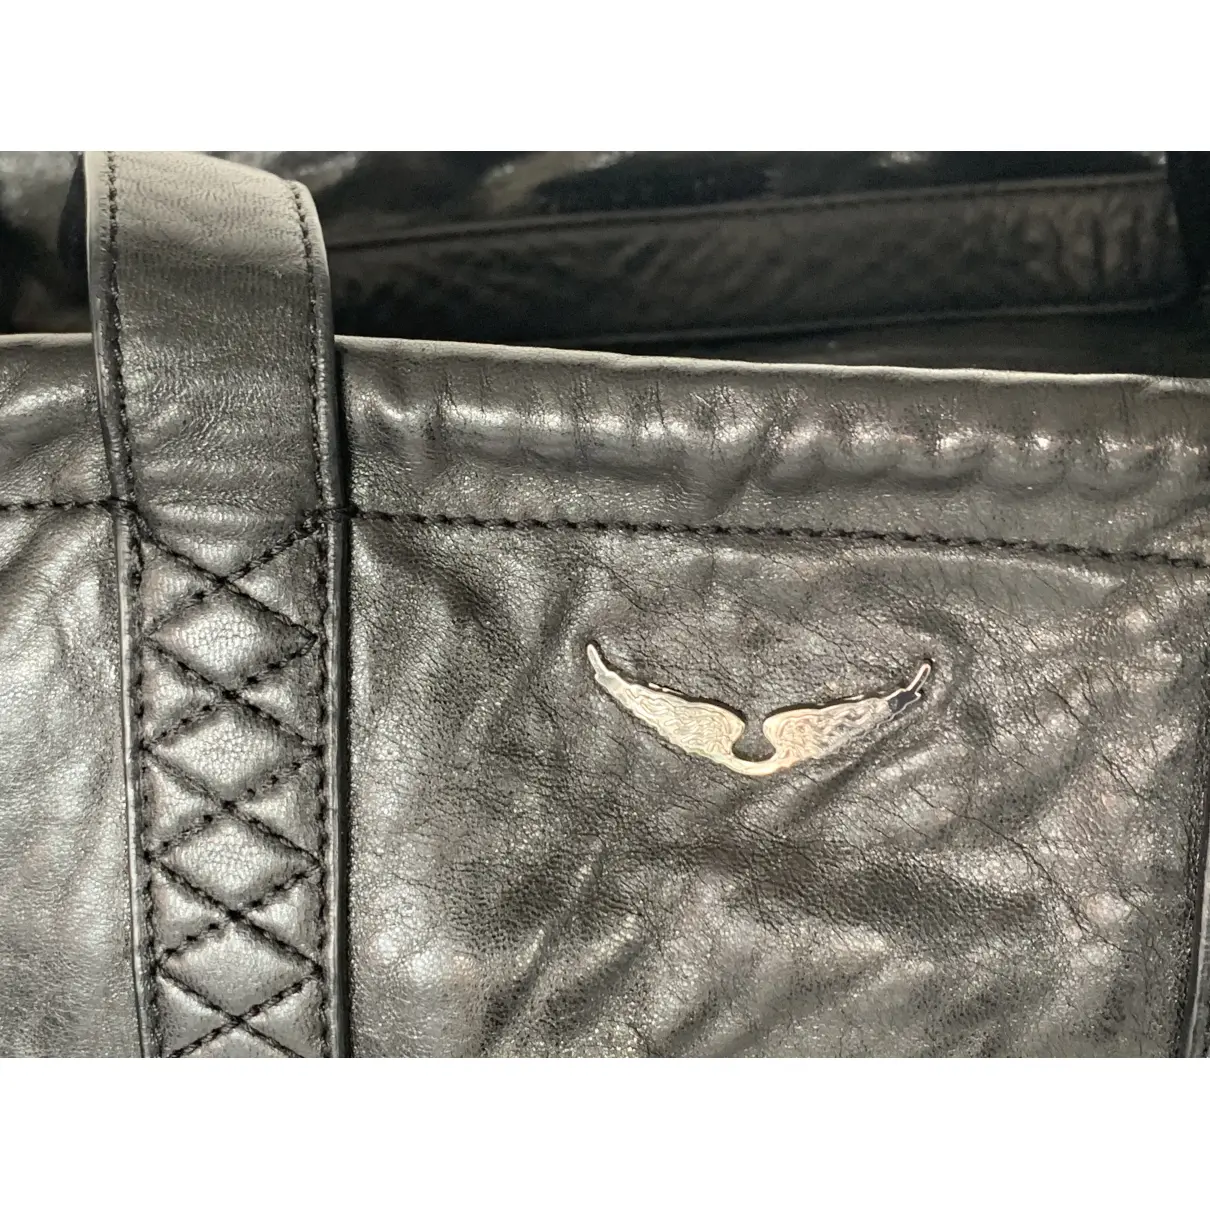 Fall Winter 2019 leather handbag Zadig & Voltaire